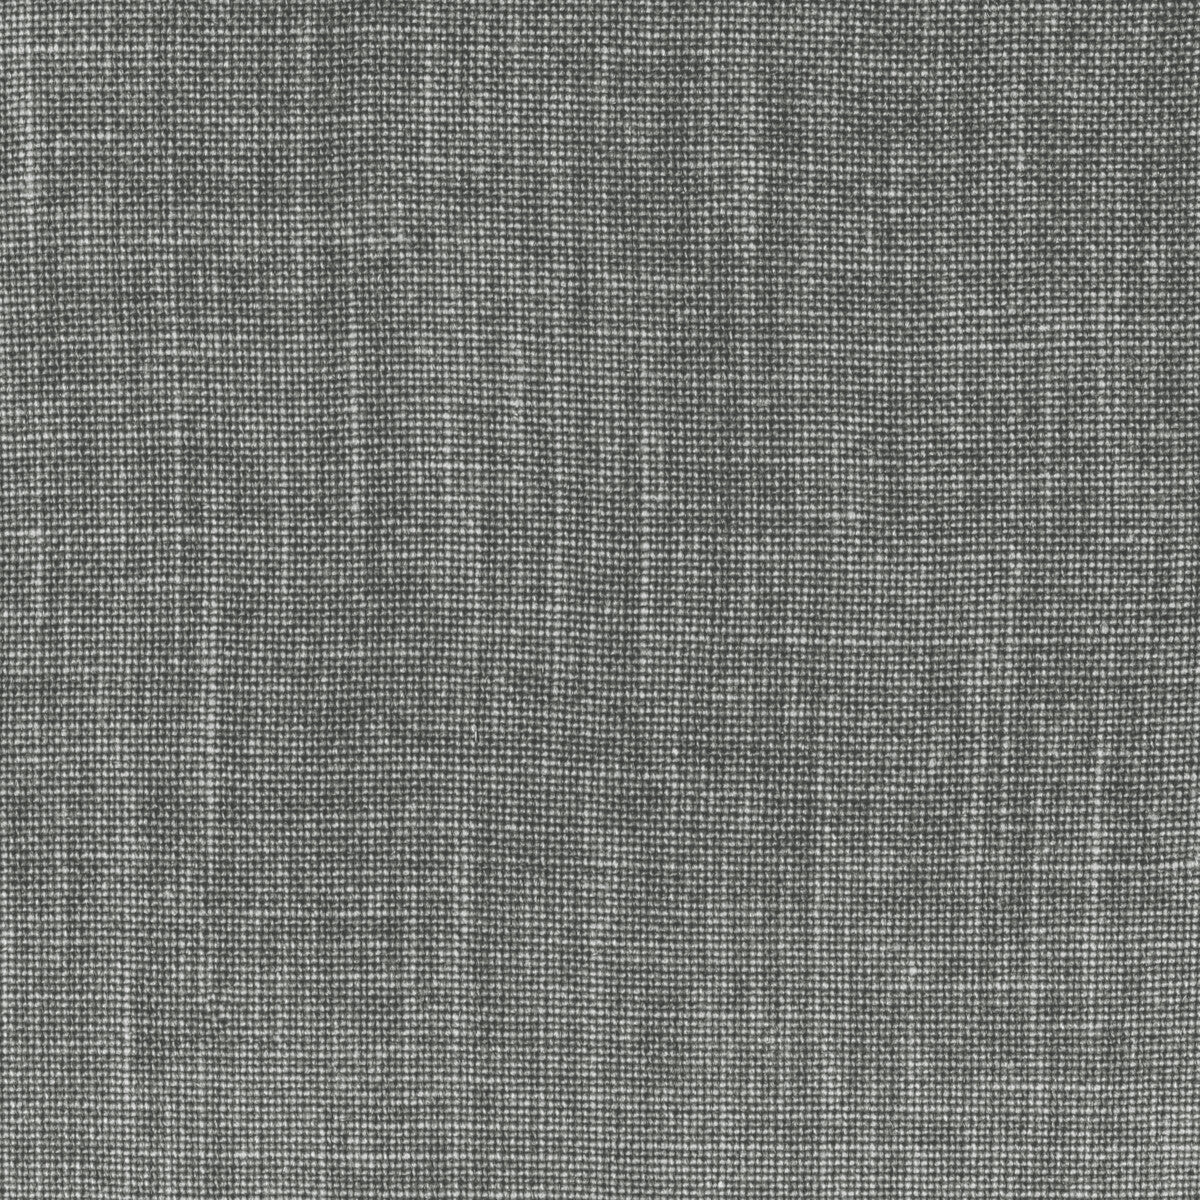 Kravet Basics fabric in 33767-11 color - pattern 33767.11.0 - by Kravet Basics in the Gis collection